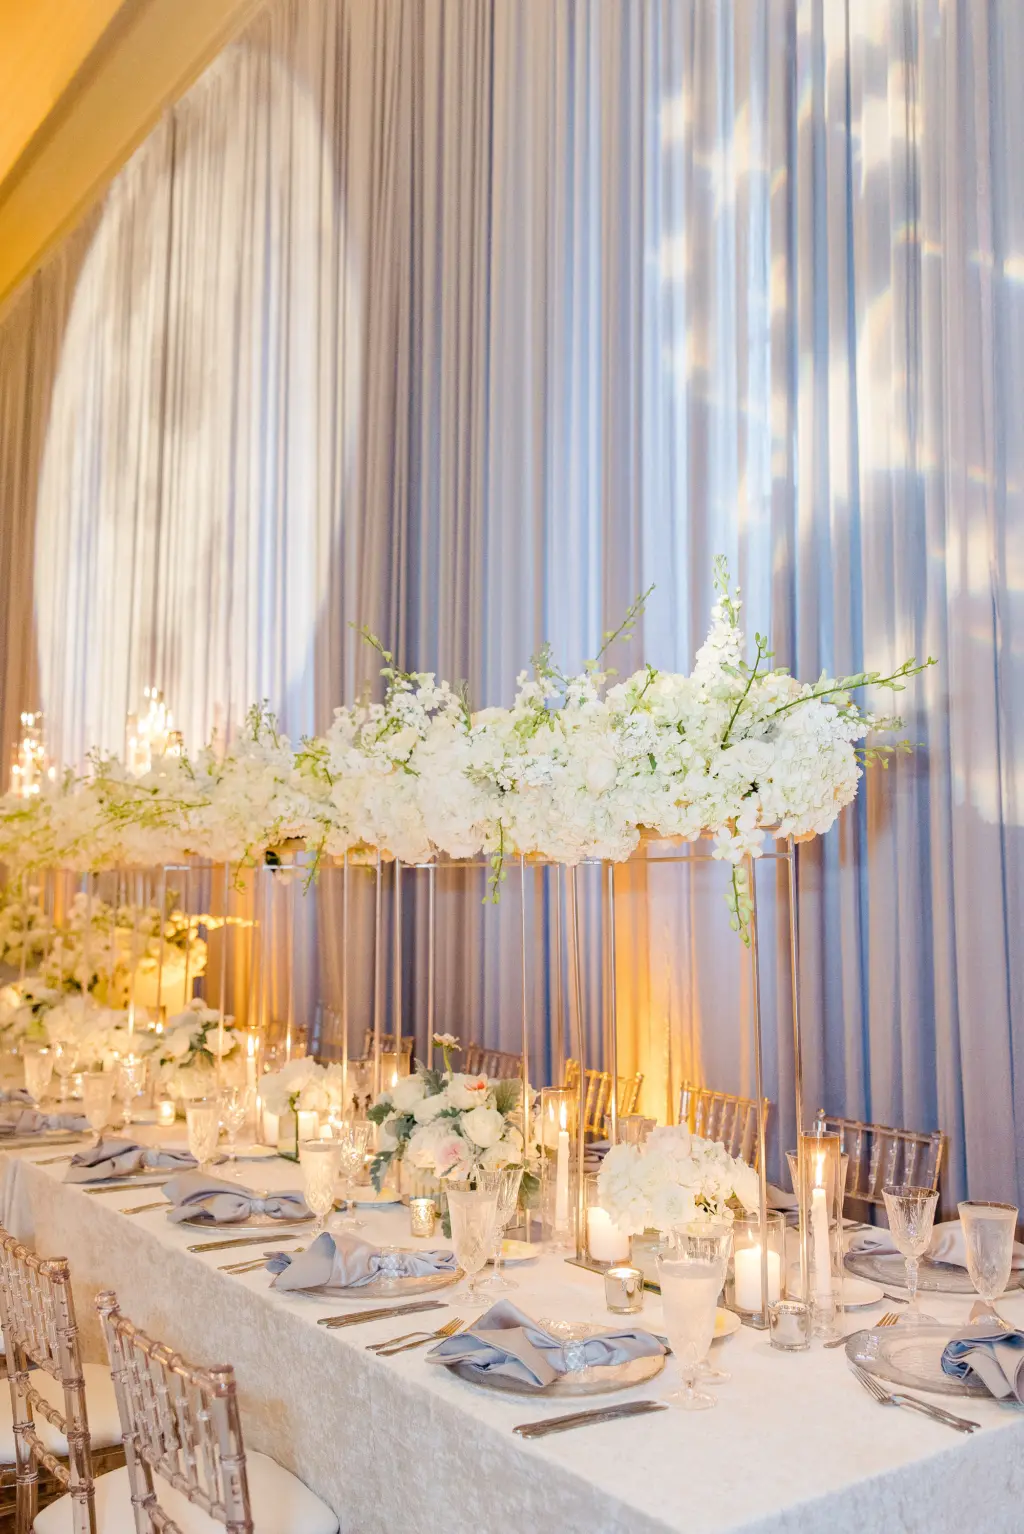 White Winter Wonderland Starry Night Wedding Reception Tall Centerpiece Decor Inspiration